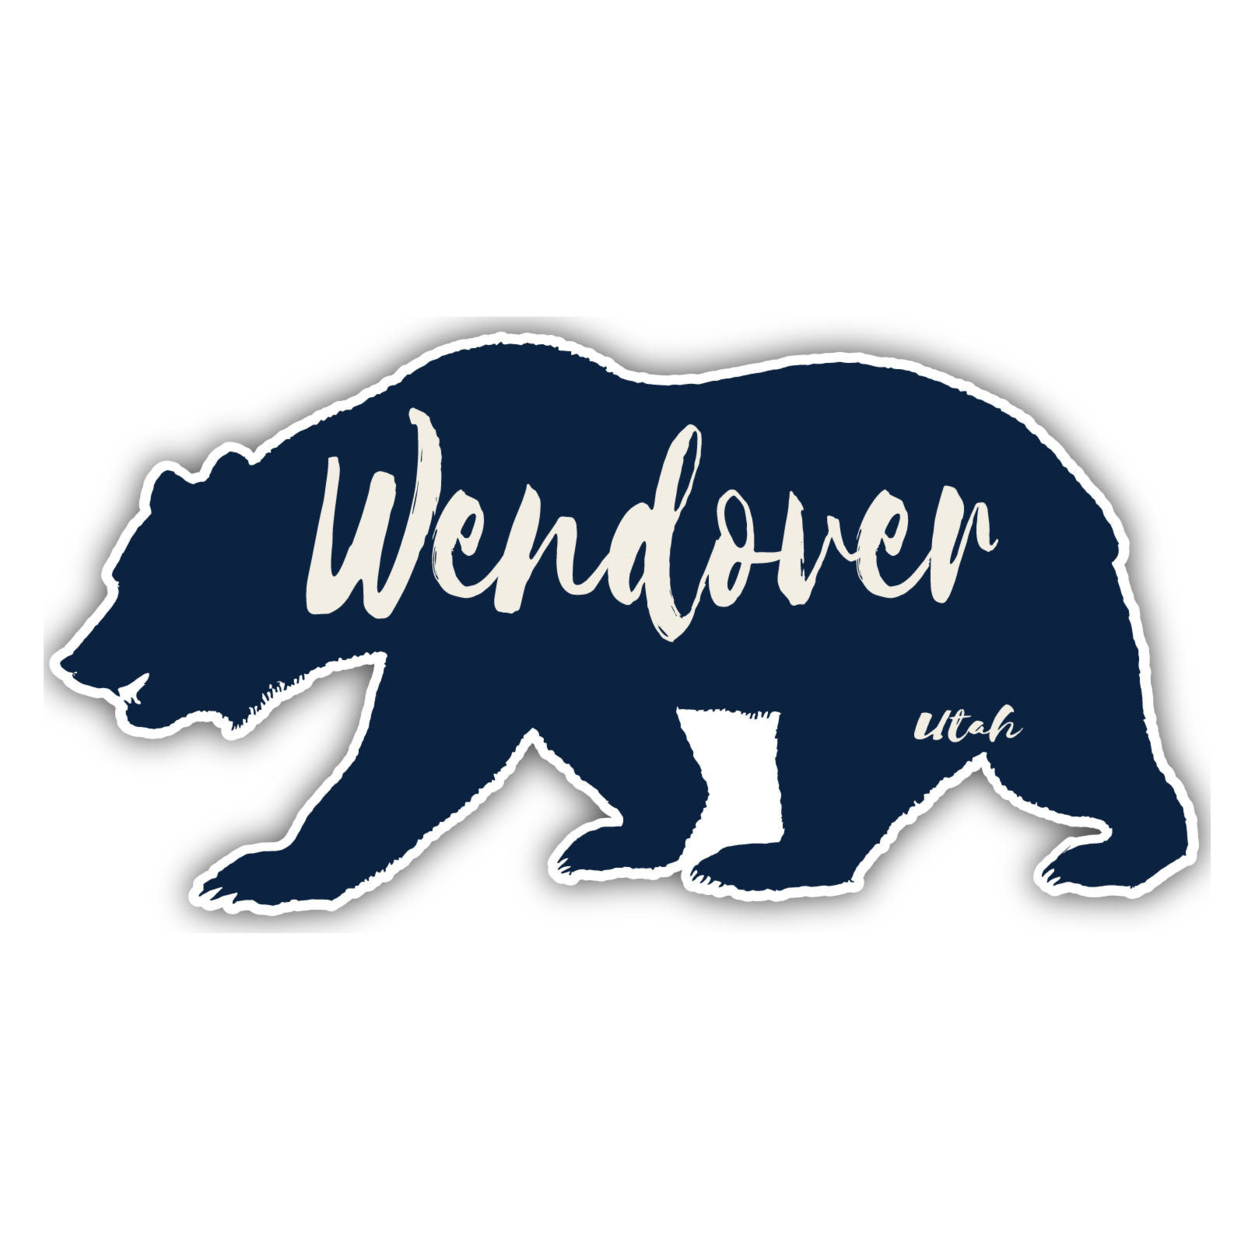 Wendover Utah Souvenir Decorative Stickers (Choose Theme And Size) - Single Unit, 4-Inch, Bear